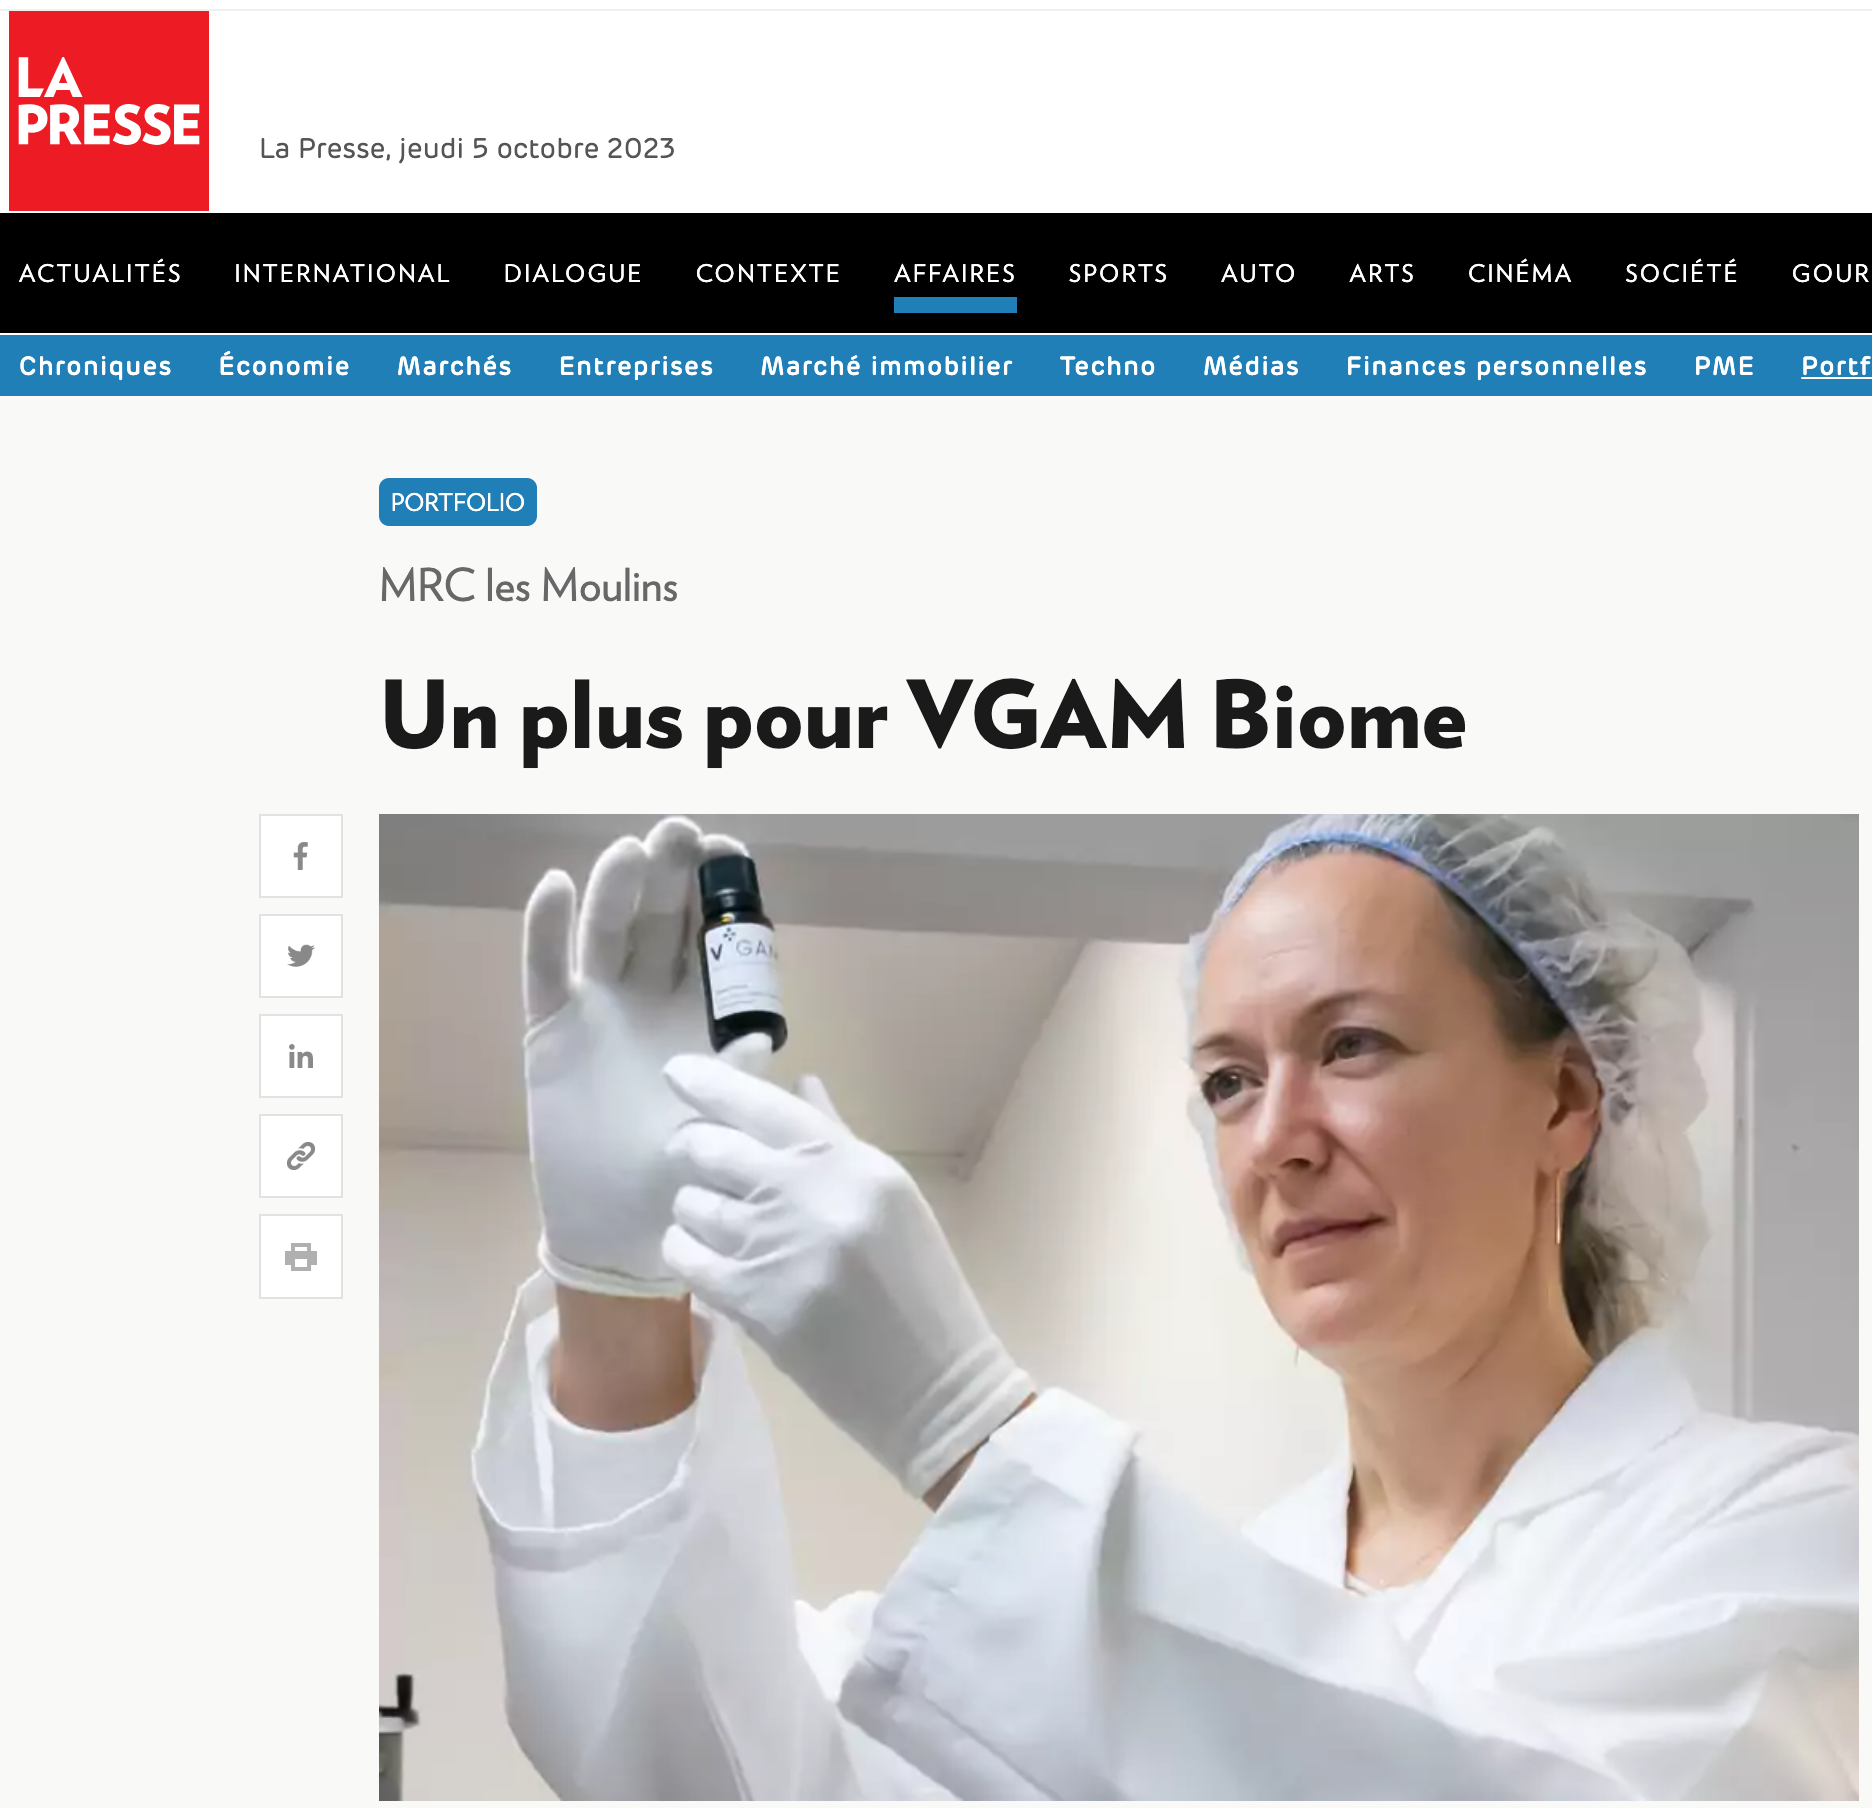 La Presse Plus Affaires VGAM biome article